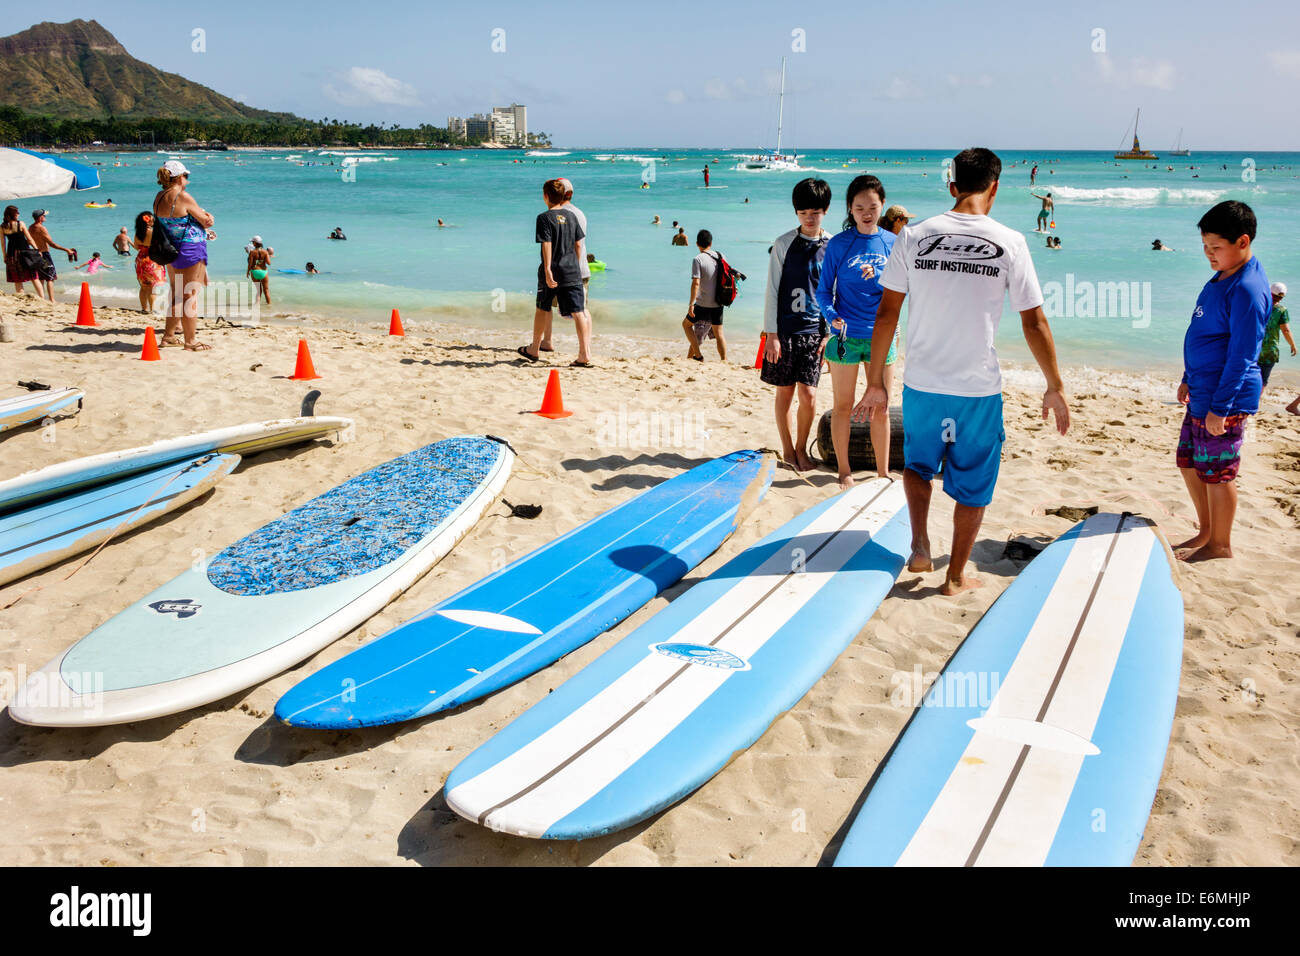 Honolulu Waikiki Beach Hawaii,Hawaiian,Oahu,Océano Pacífico,frente al mar,bañistas,tabla de surf,surfista,tabla de surf,surf,clase,minorías asiáticas,chicos,ma Foto de stock